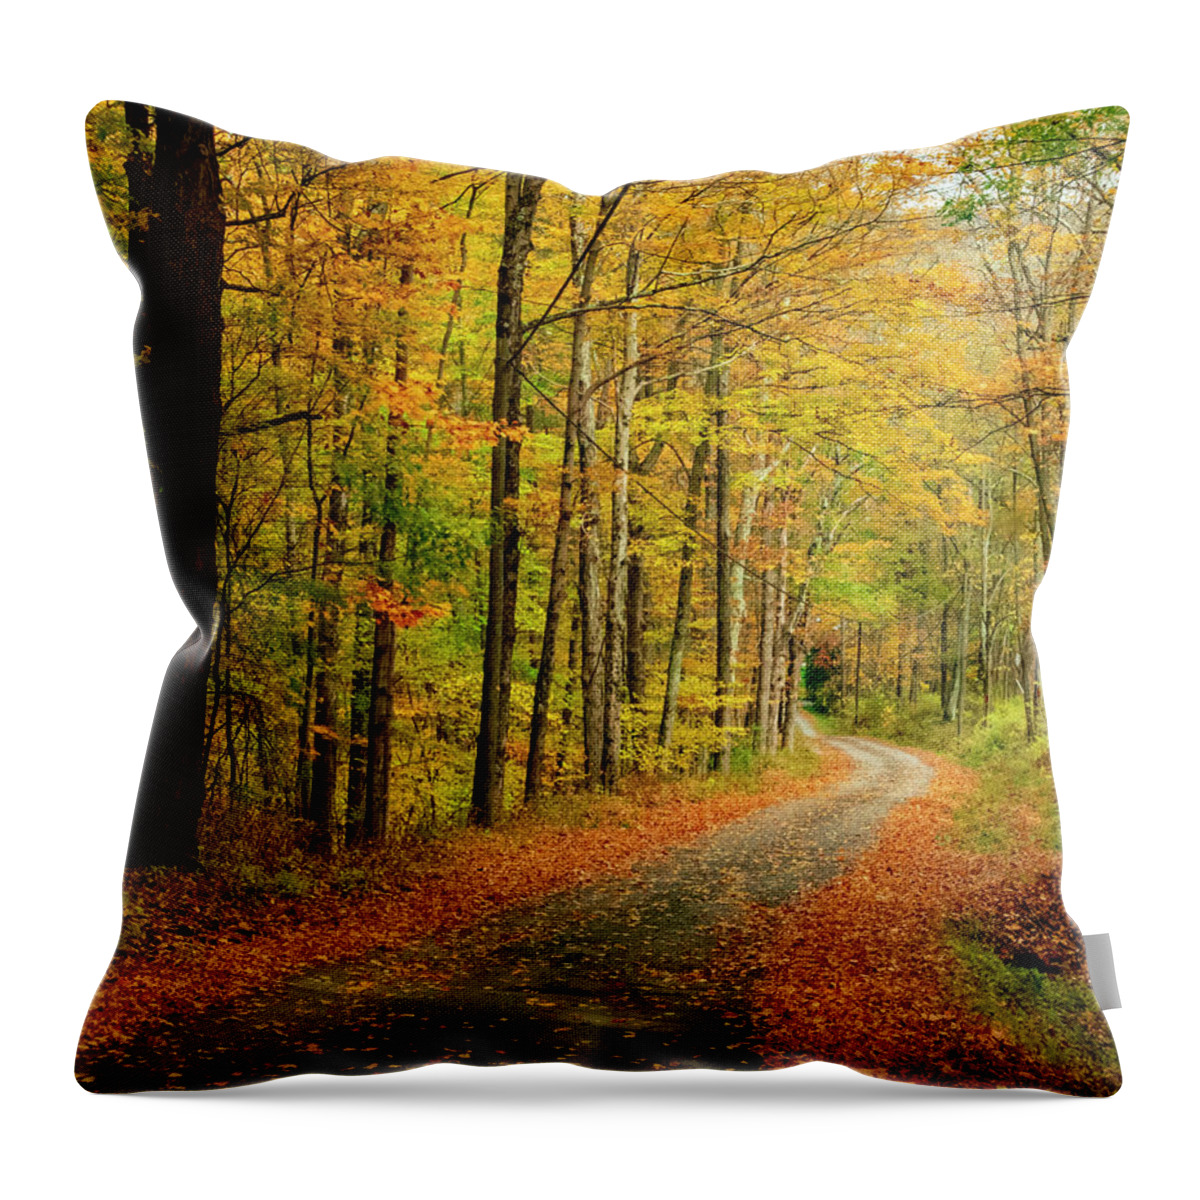 Autumn Throw Pillow featuring the photograph Travel Into Autumn by Cathy Kovarik